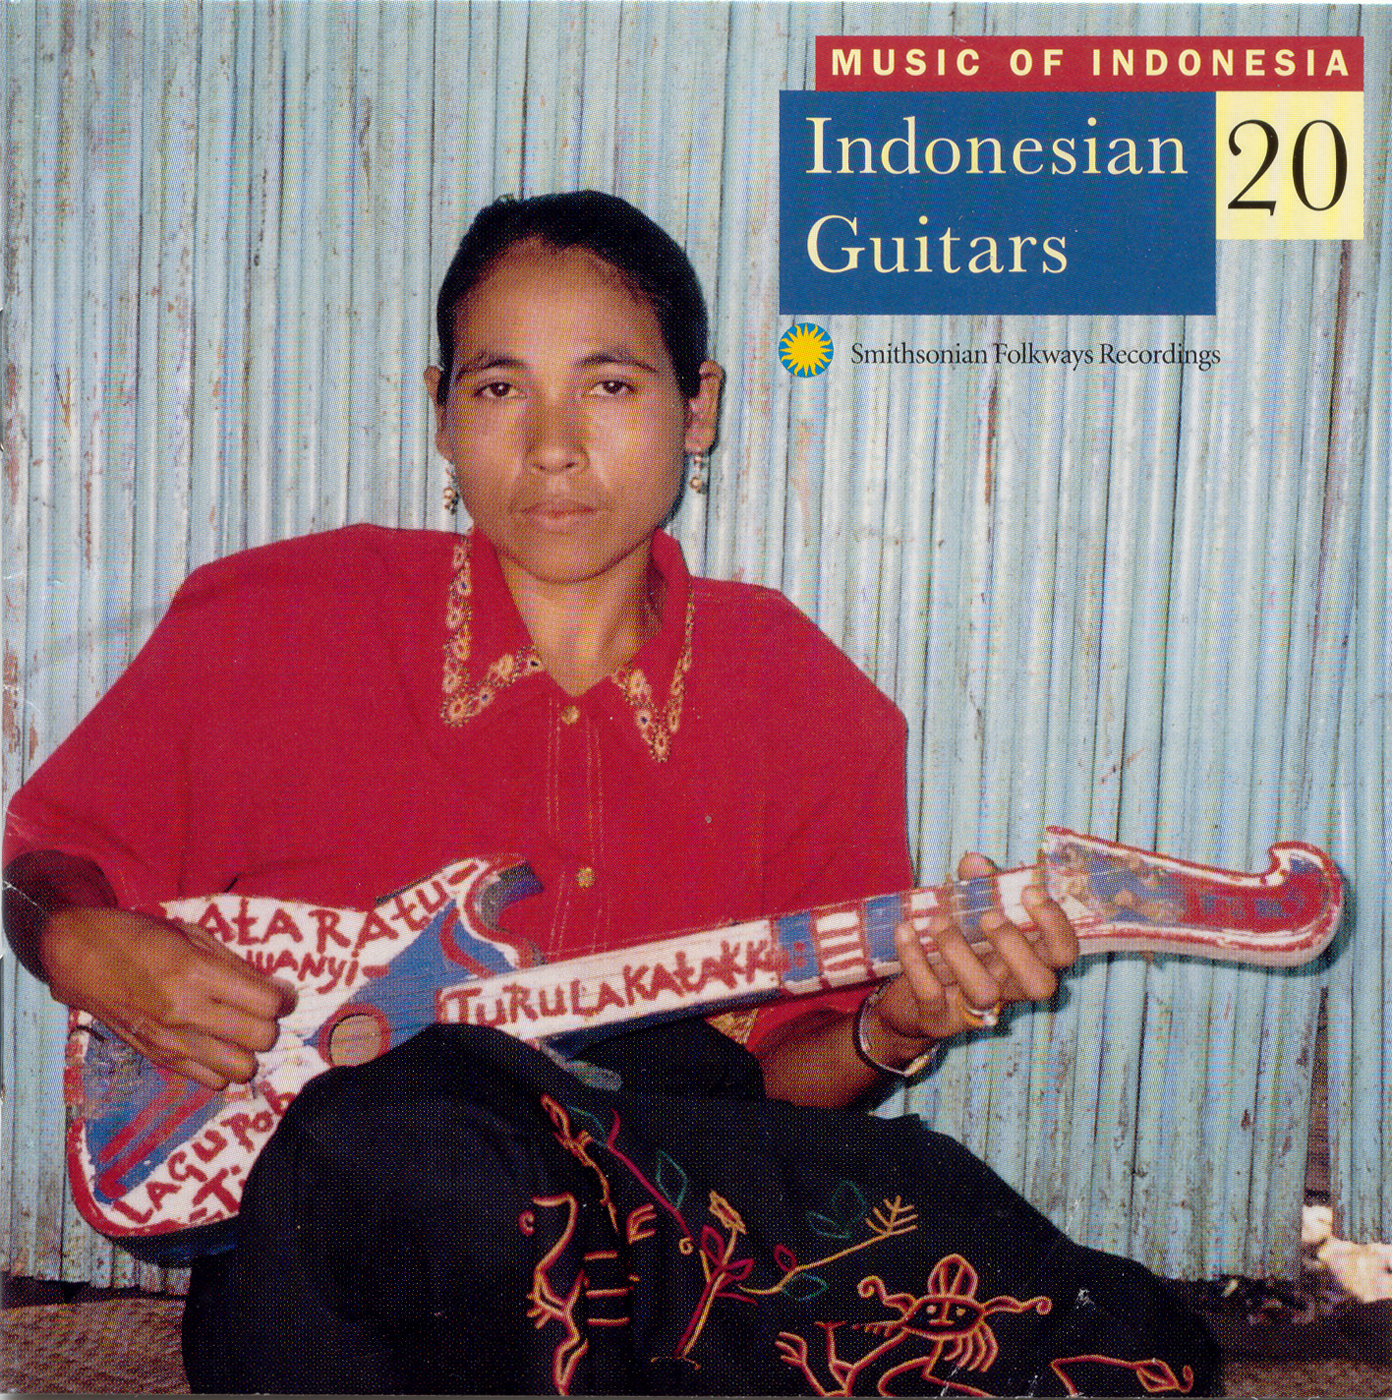 Cover of <i>Music of Indonesia, Vol. 20: Indonesian Guitars</i>, photo by Aton Rustandi Mulyana.